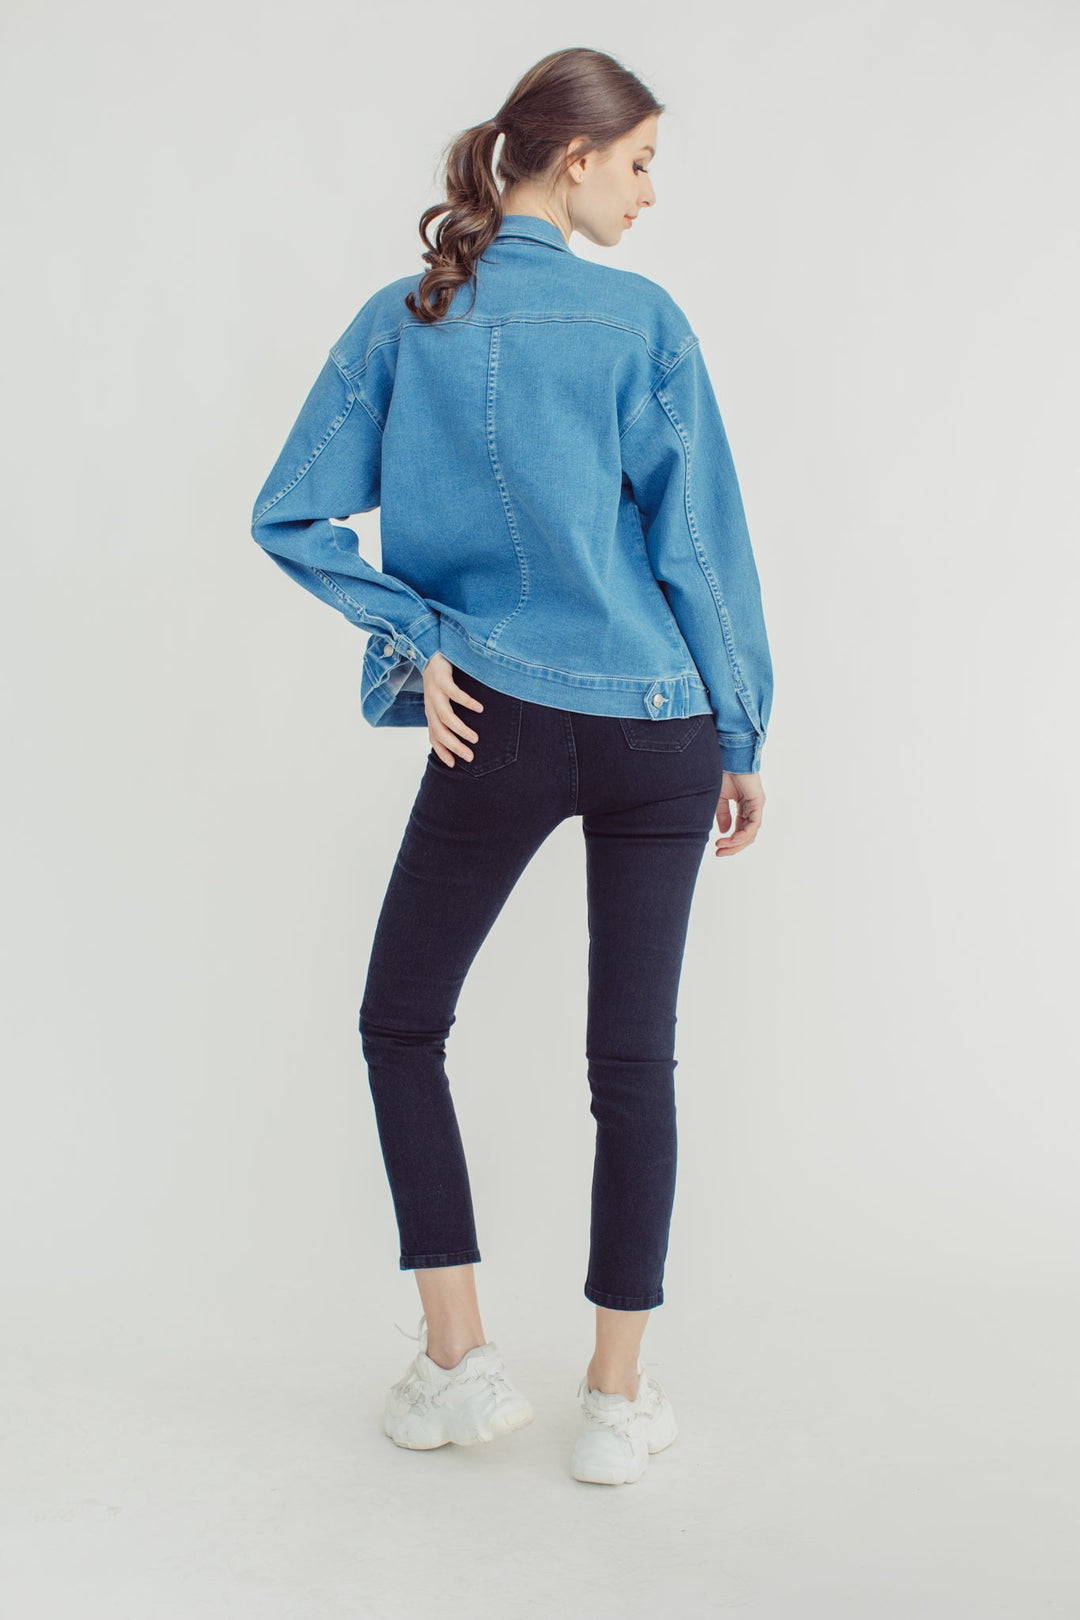 Arielle Medium Blue Oversized Denim Jacket - Mossimo PH